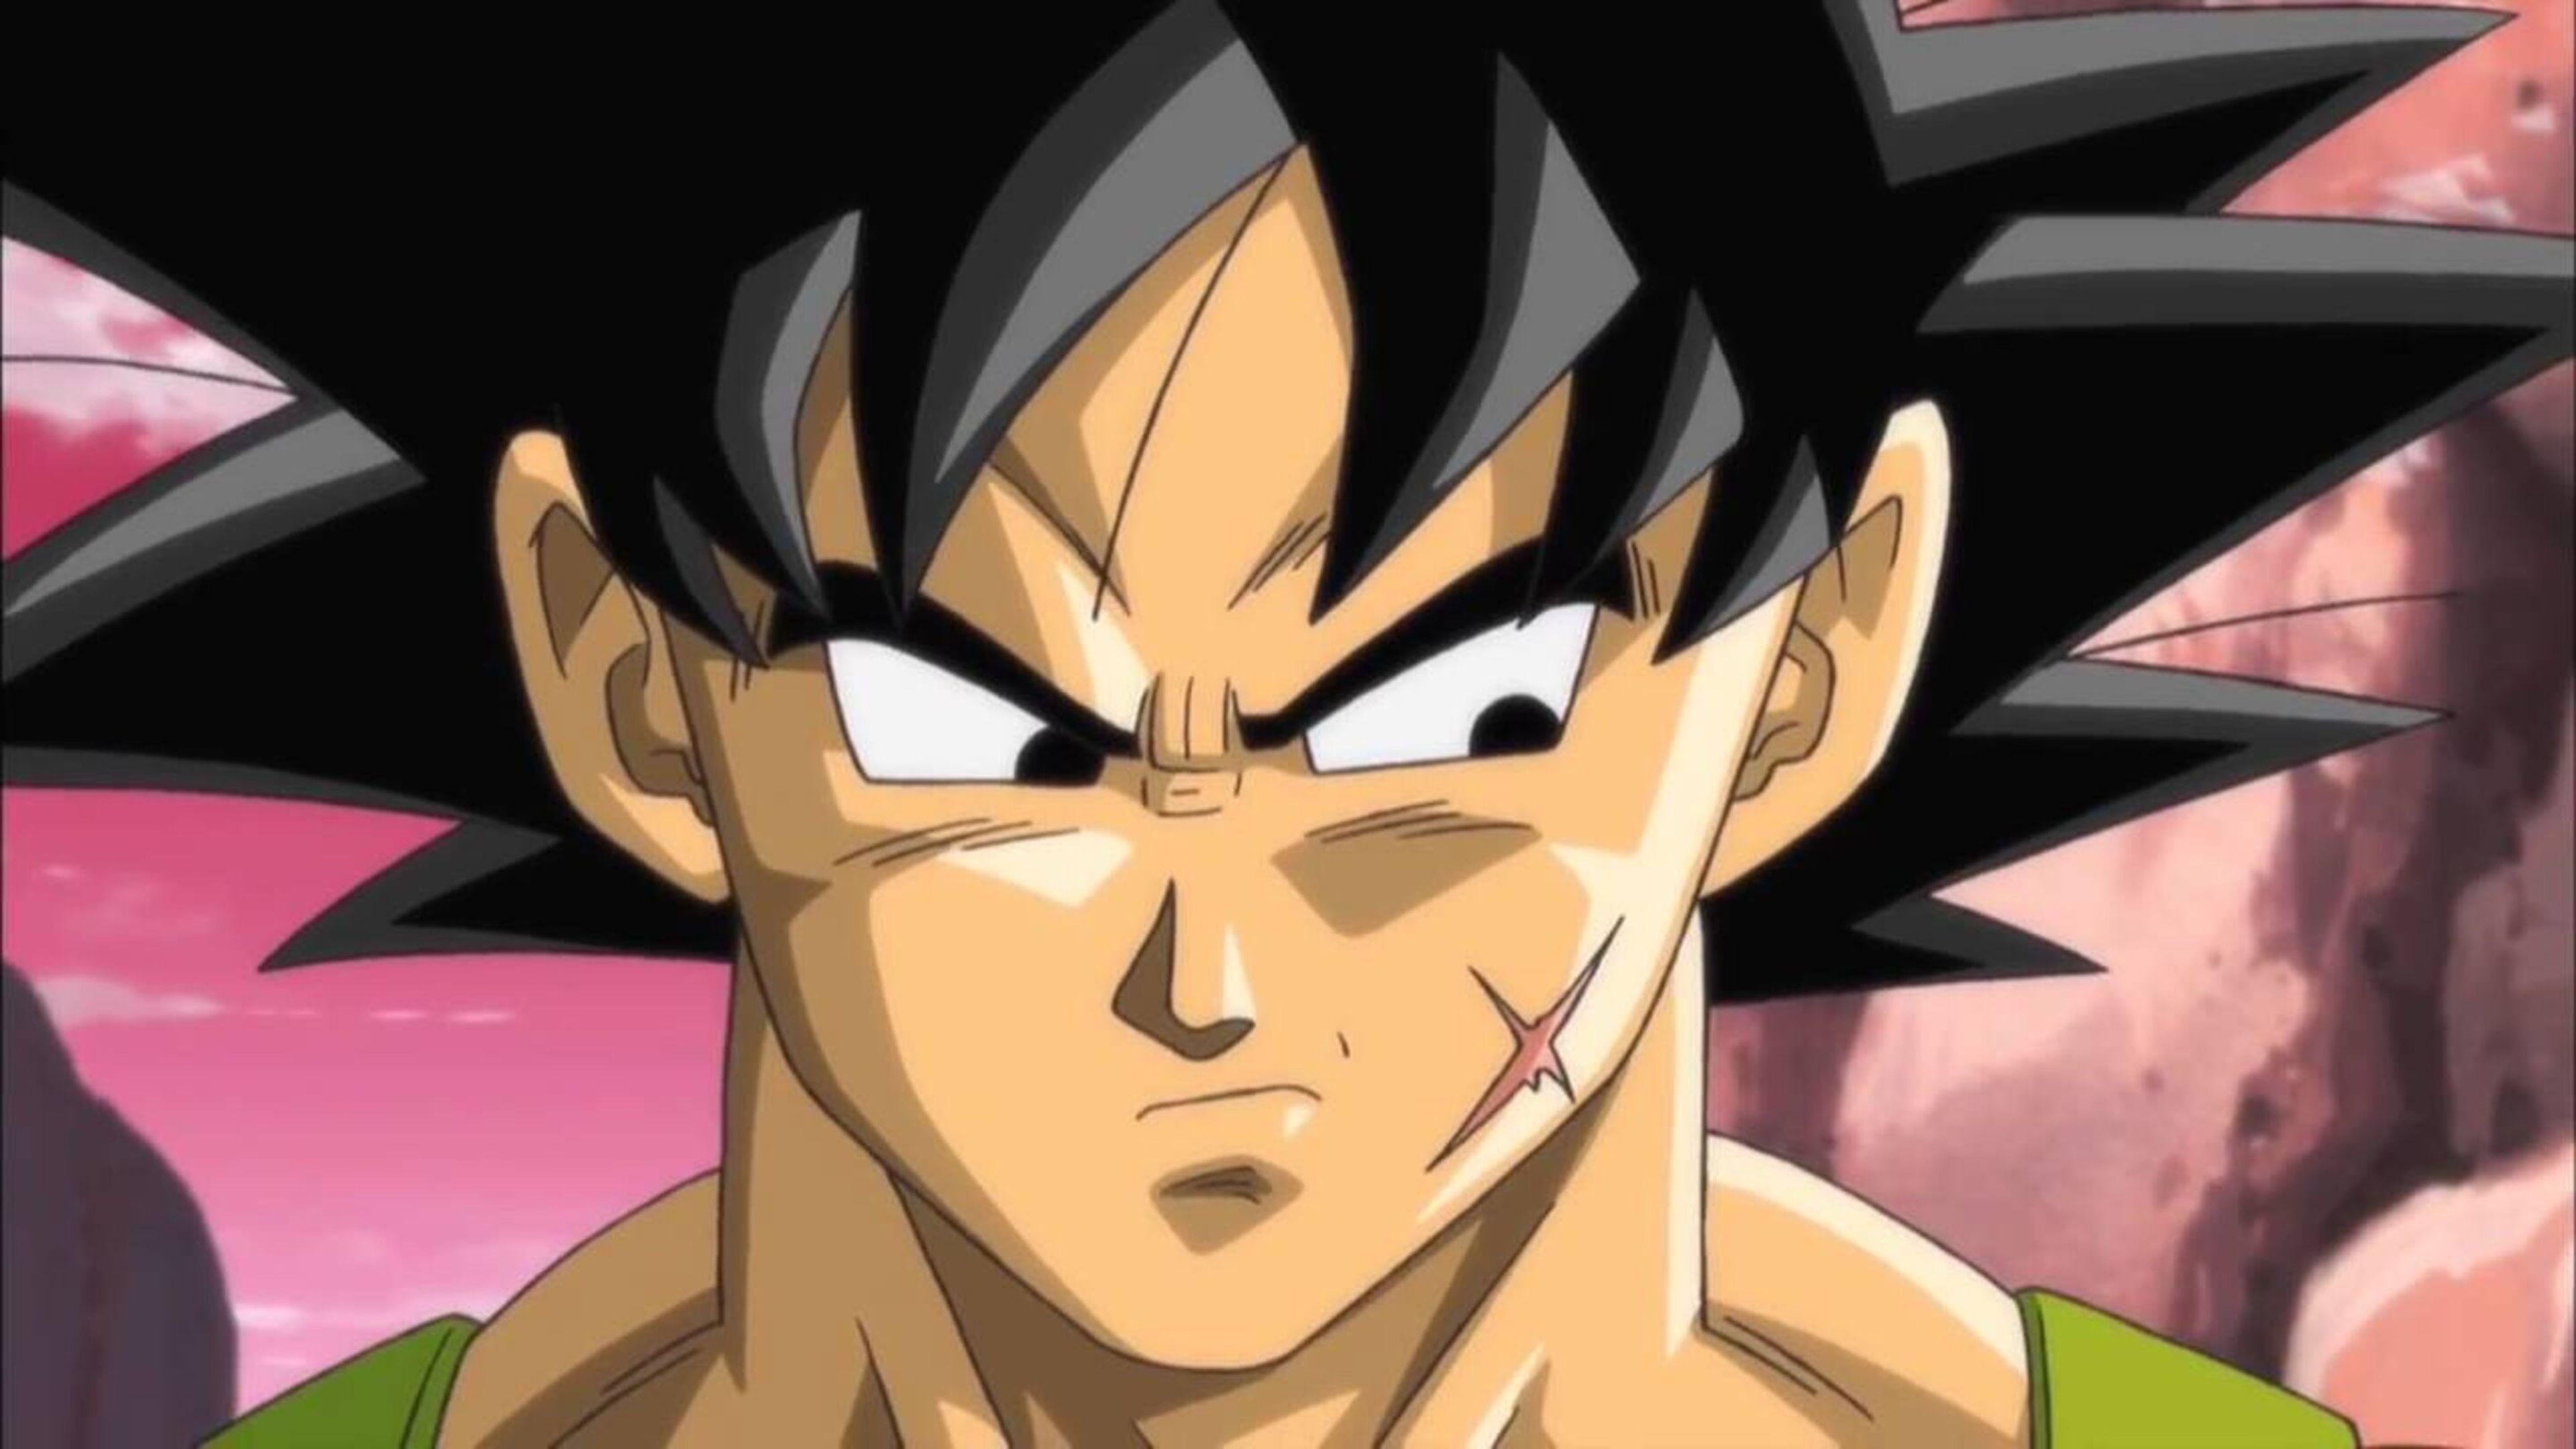 Dragon Ball - Goku y Bardock por fin se encontrarán en persona en un episodio anime oficial. ¿Estás preparado? 